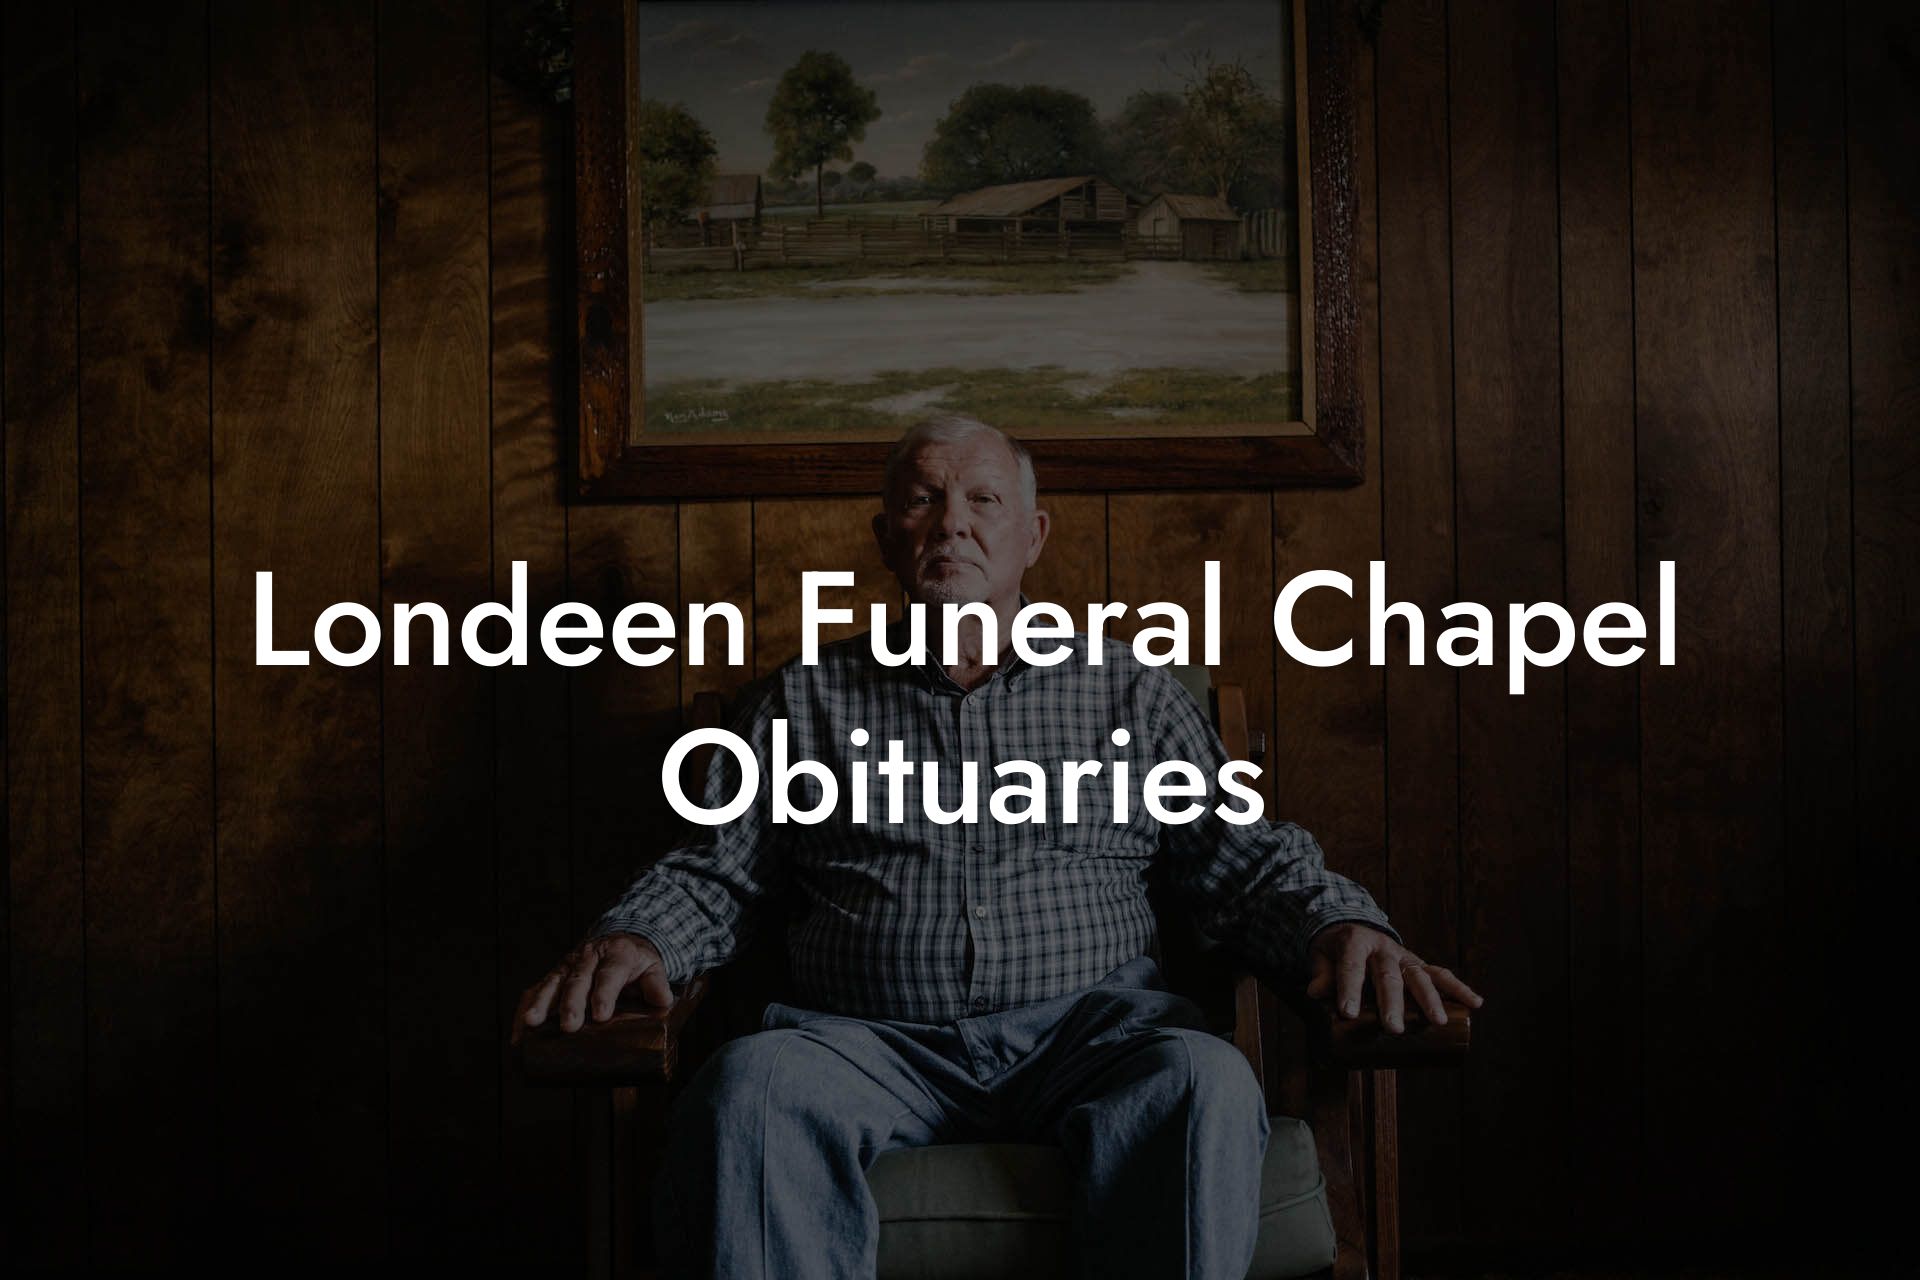 Londeen Funeral Chapel Obituaries